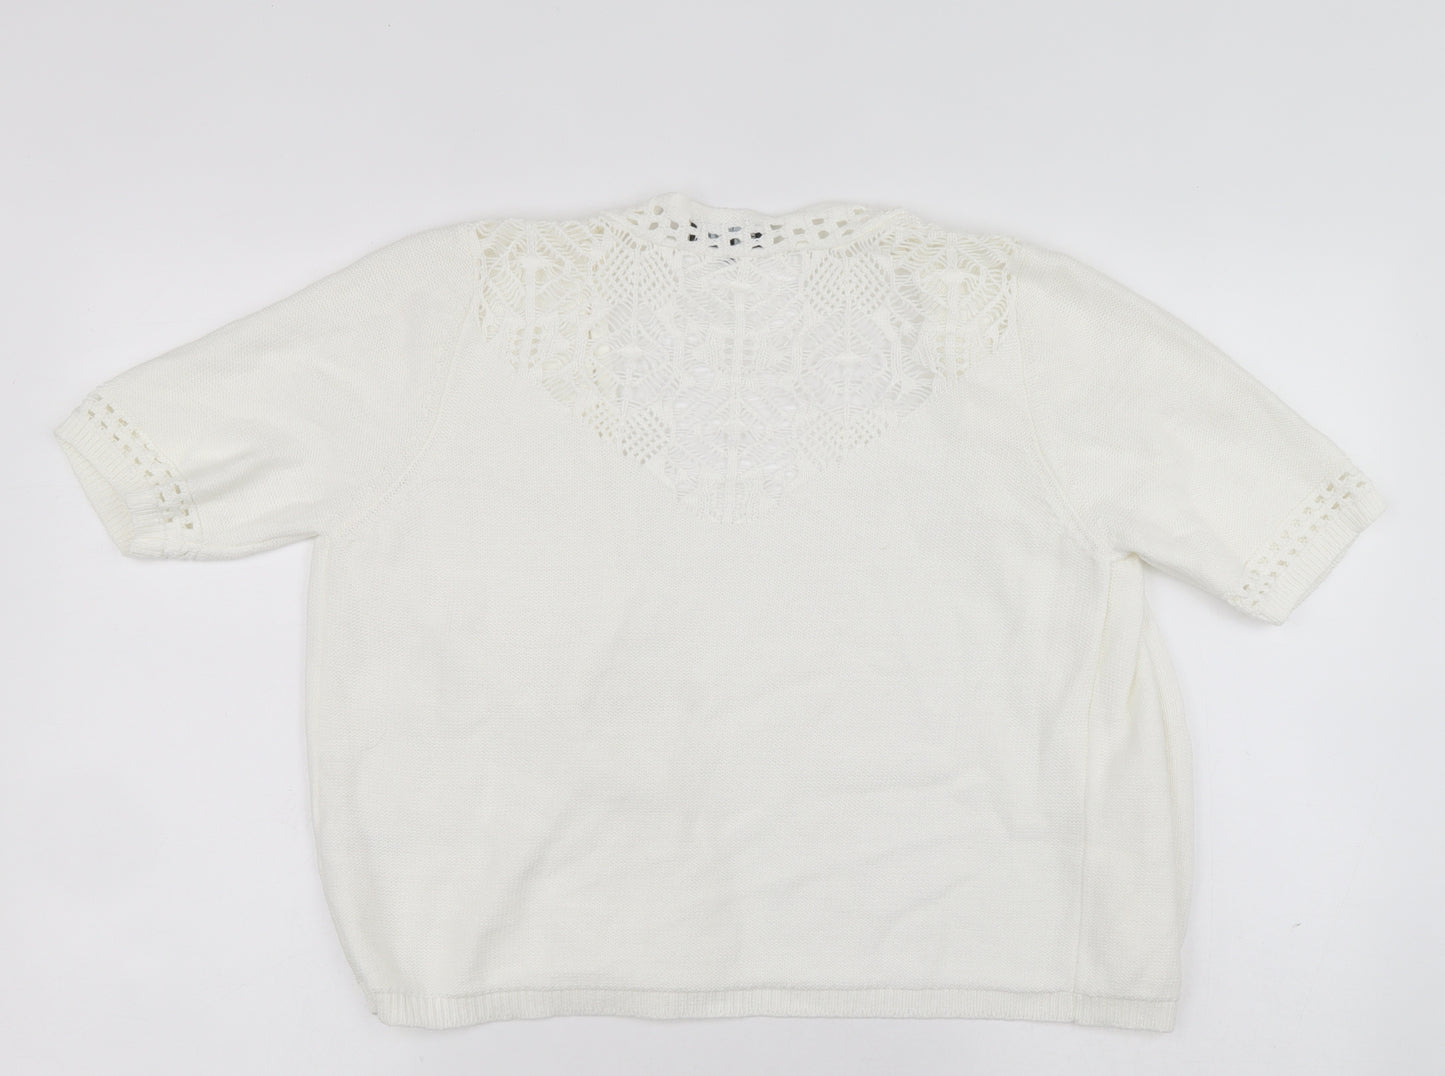 Papaya Girls White V-Neck Cardigan Jumper Size 14 Years - Crochet design on back and sleeves